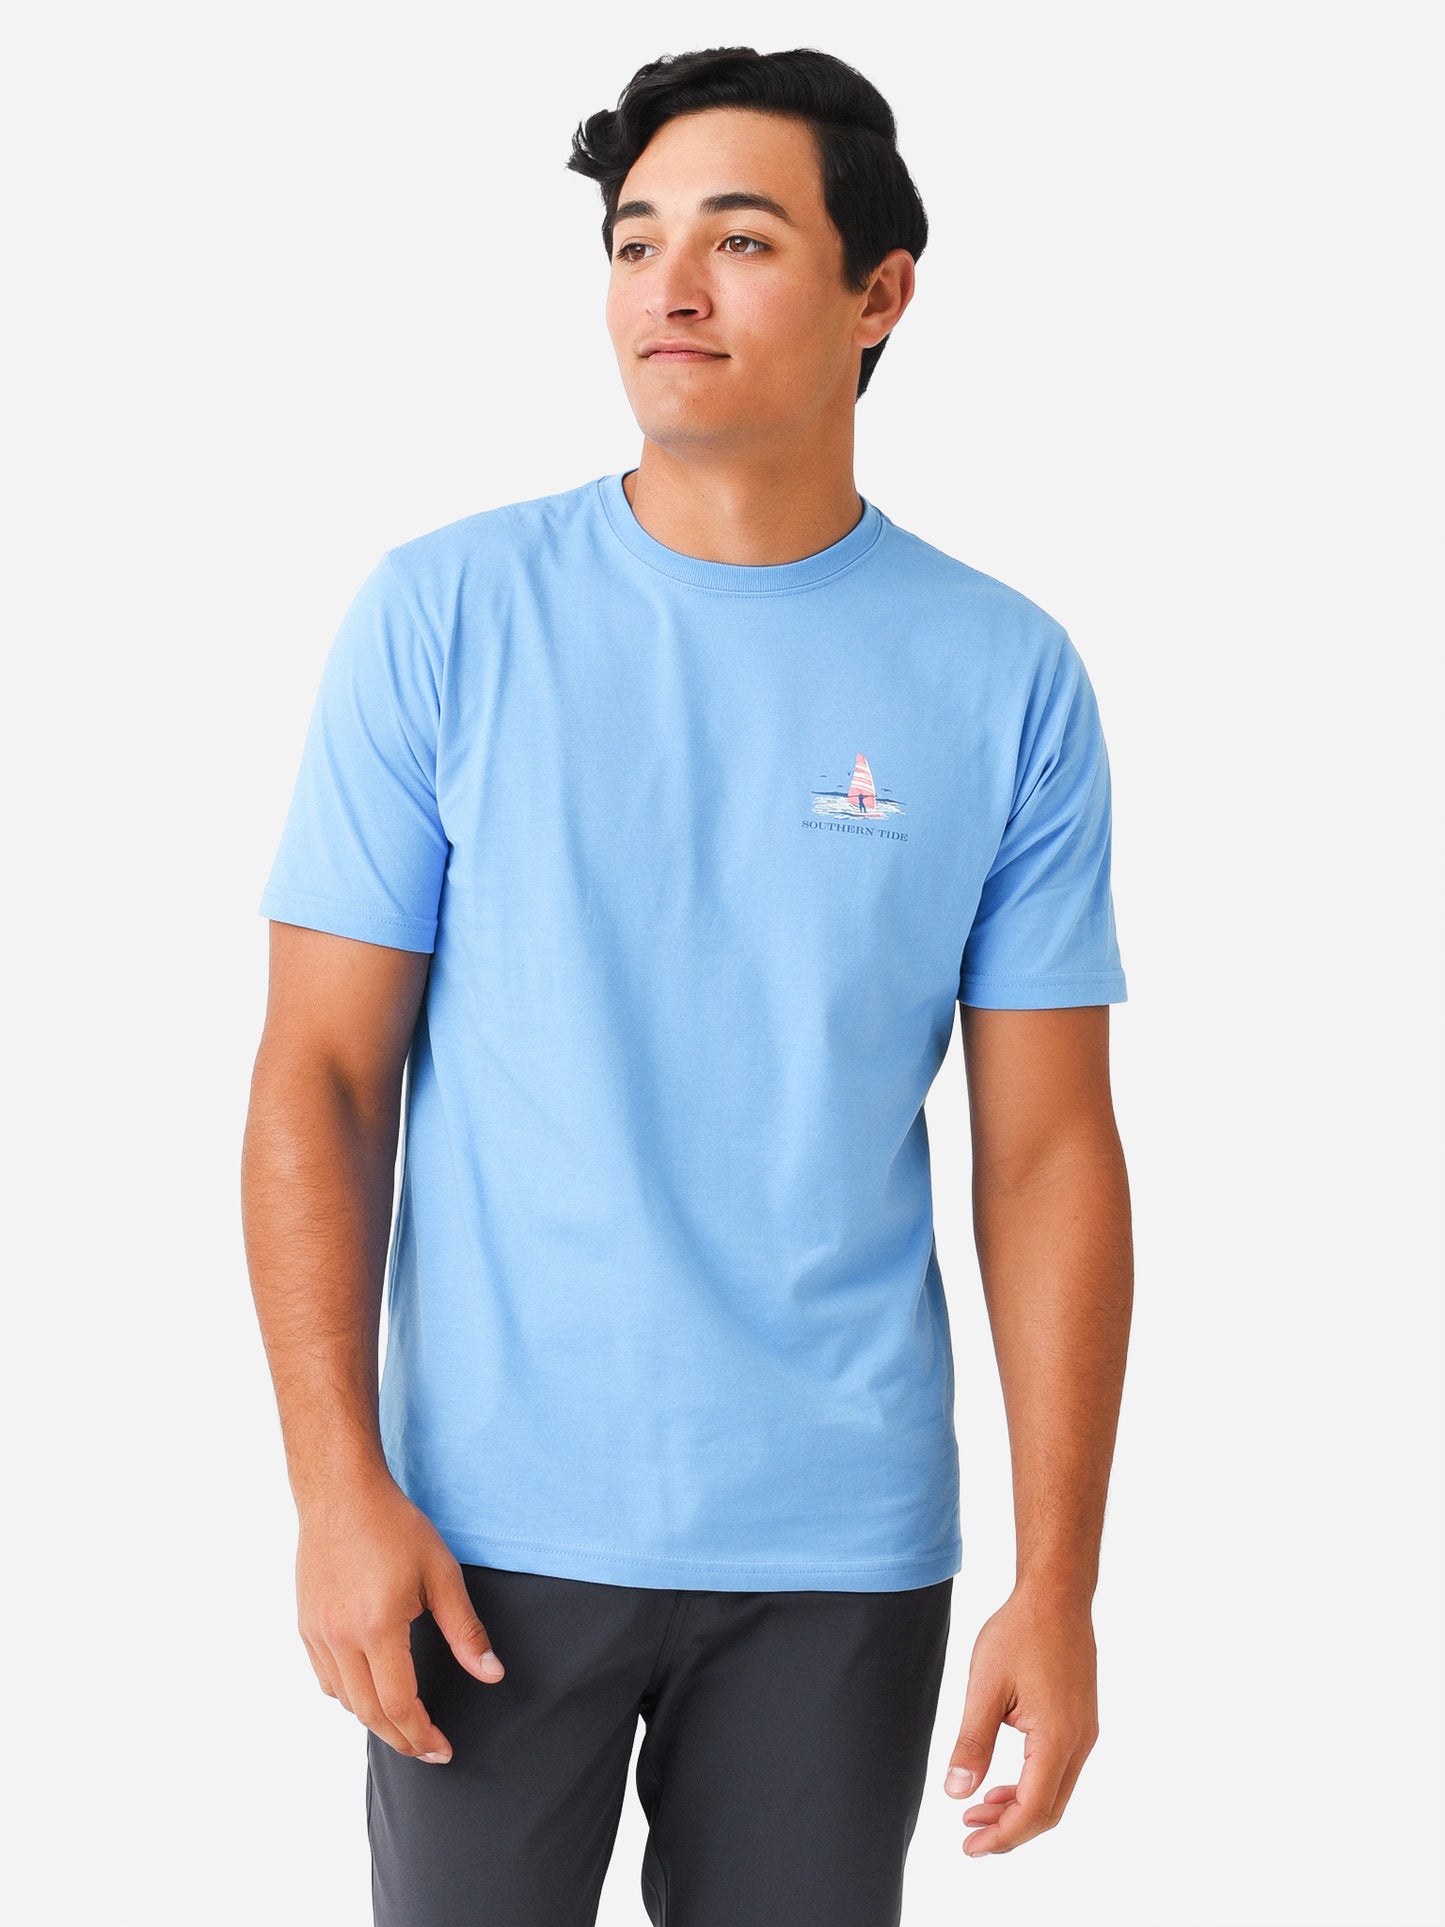 Southern Tide Men's Fin Surfing T-Shirt